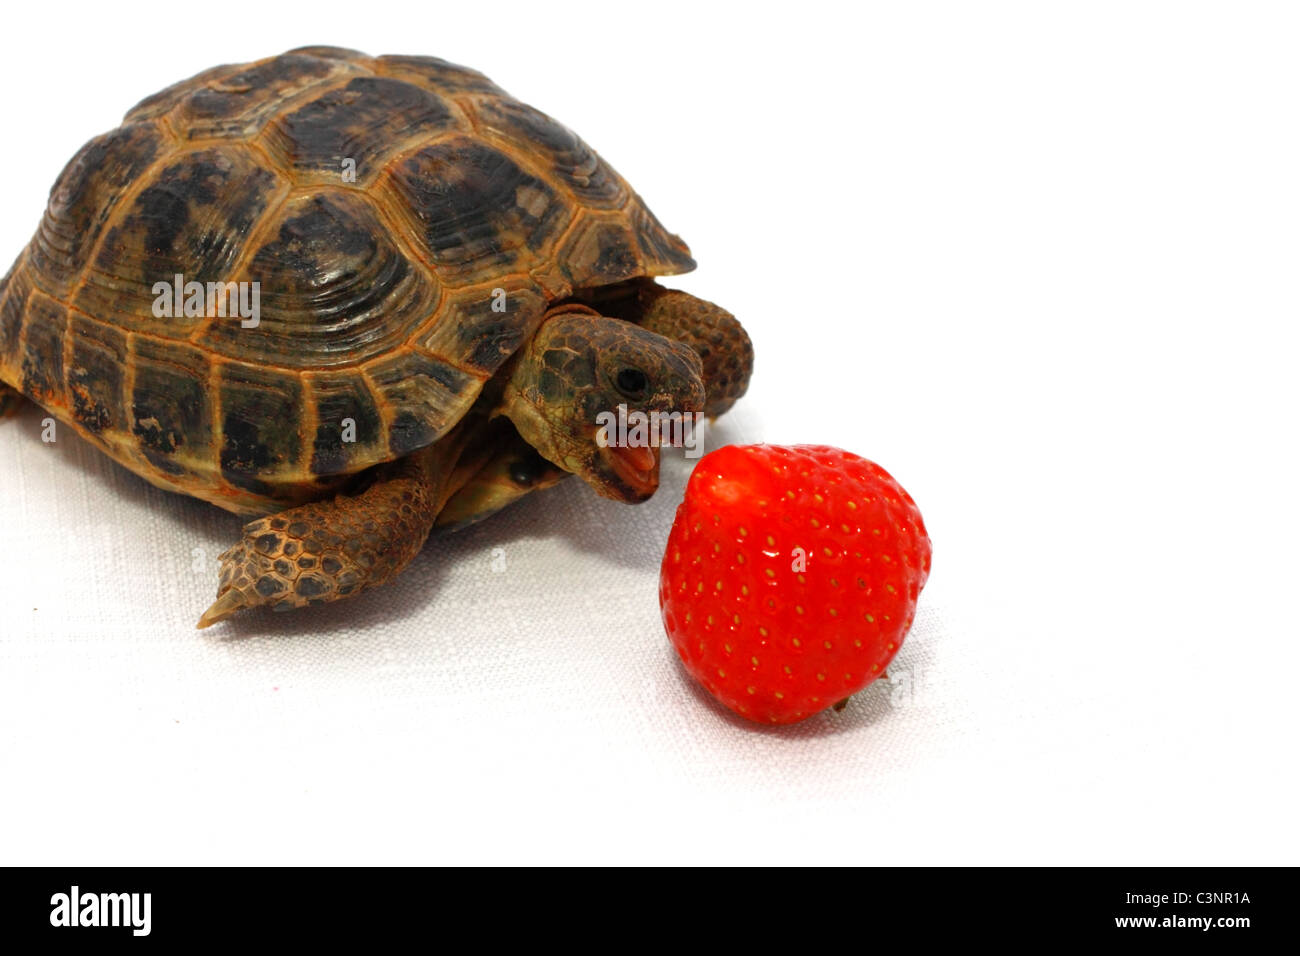 Russian tortoise eats juicy strawberry on white background Stock Photo